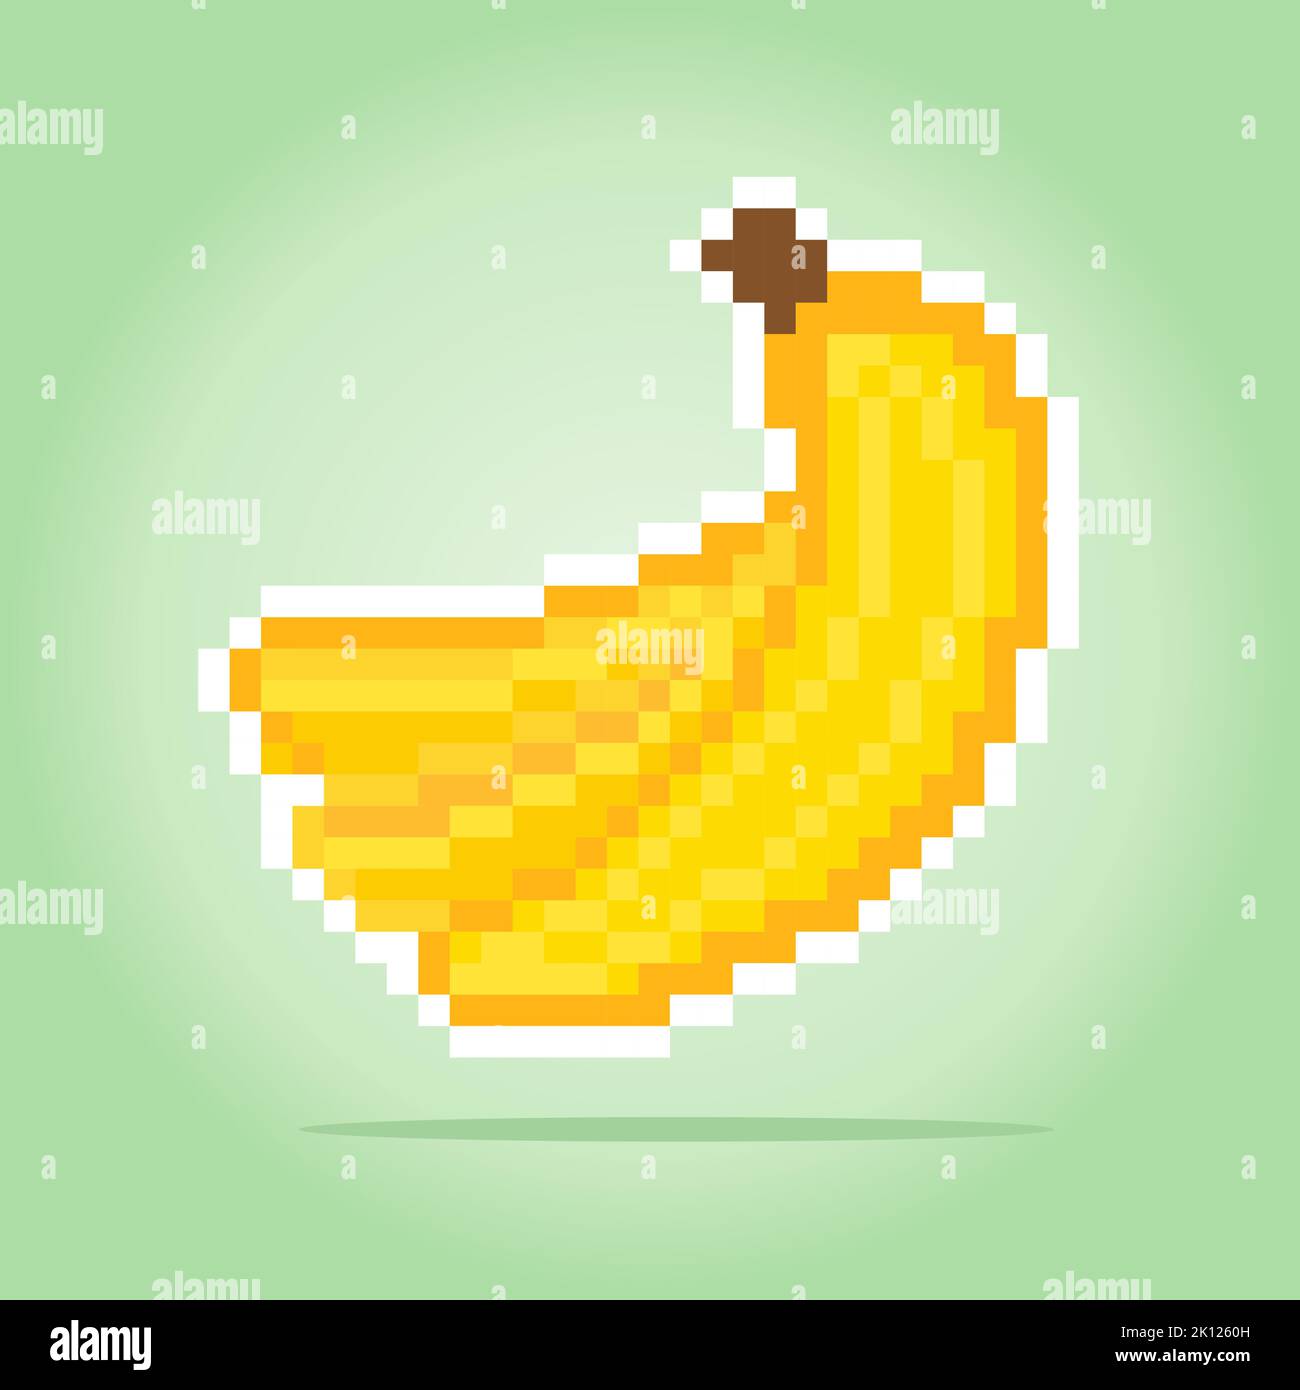 Set of pixel art fruits icon. 32x32 pixels. Vector illustration on